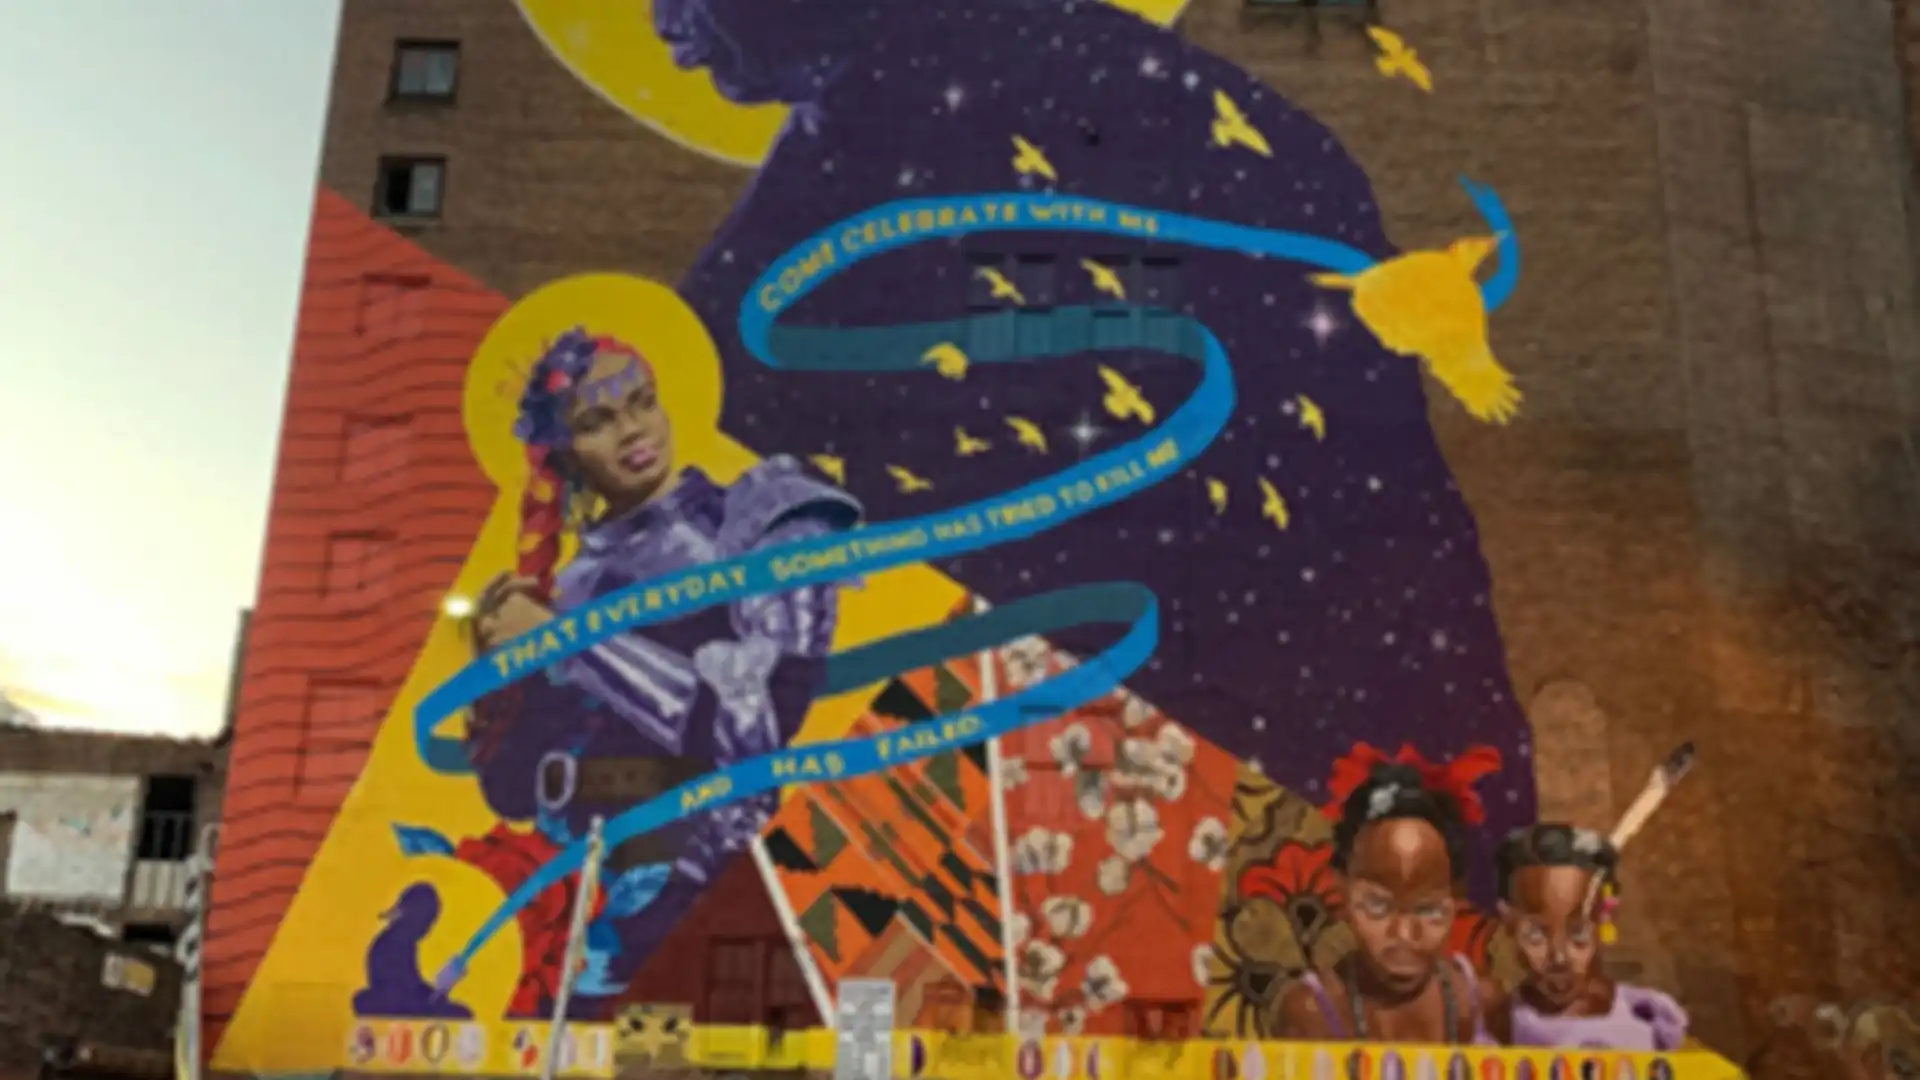 A mural in Newark